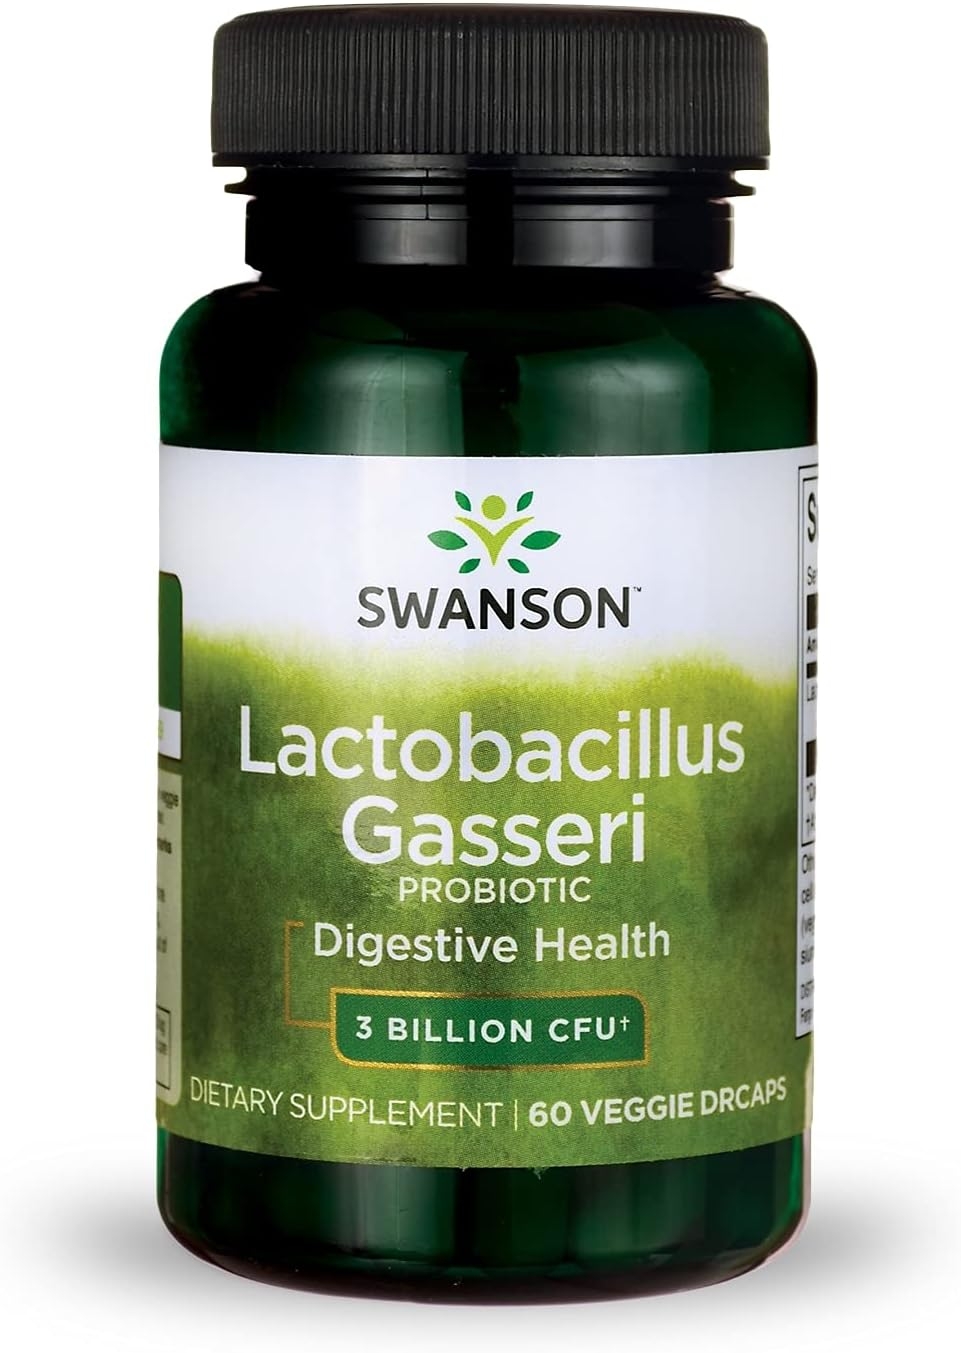 Swanson Lactobacillus Gasseri - Probiotic Supplement Supporting Digestive Health with 3 Billion CFU - Design-Release Satiety & Fat Metabolism Support - (60 Veggie Capsules)